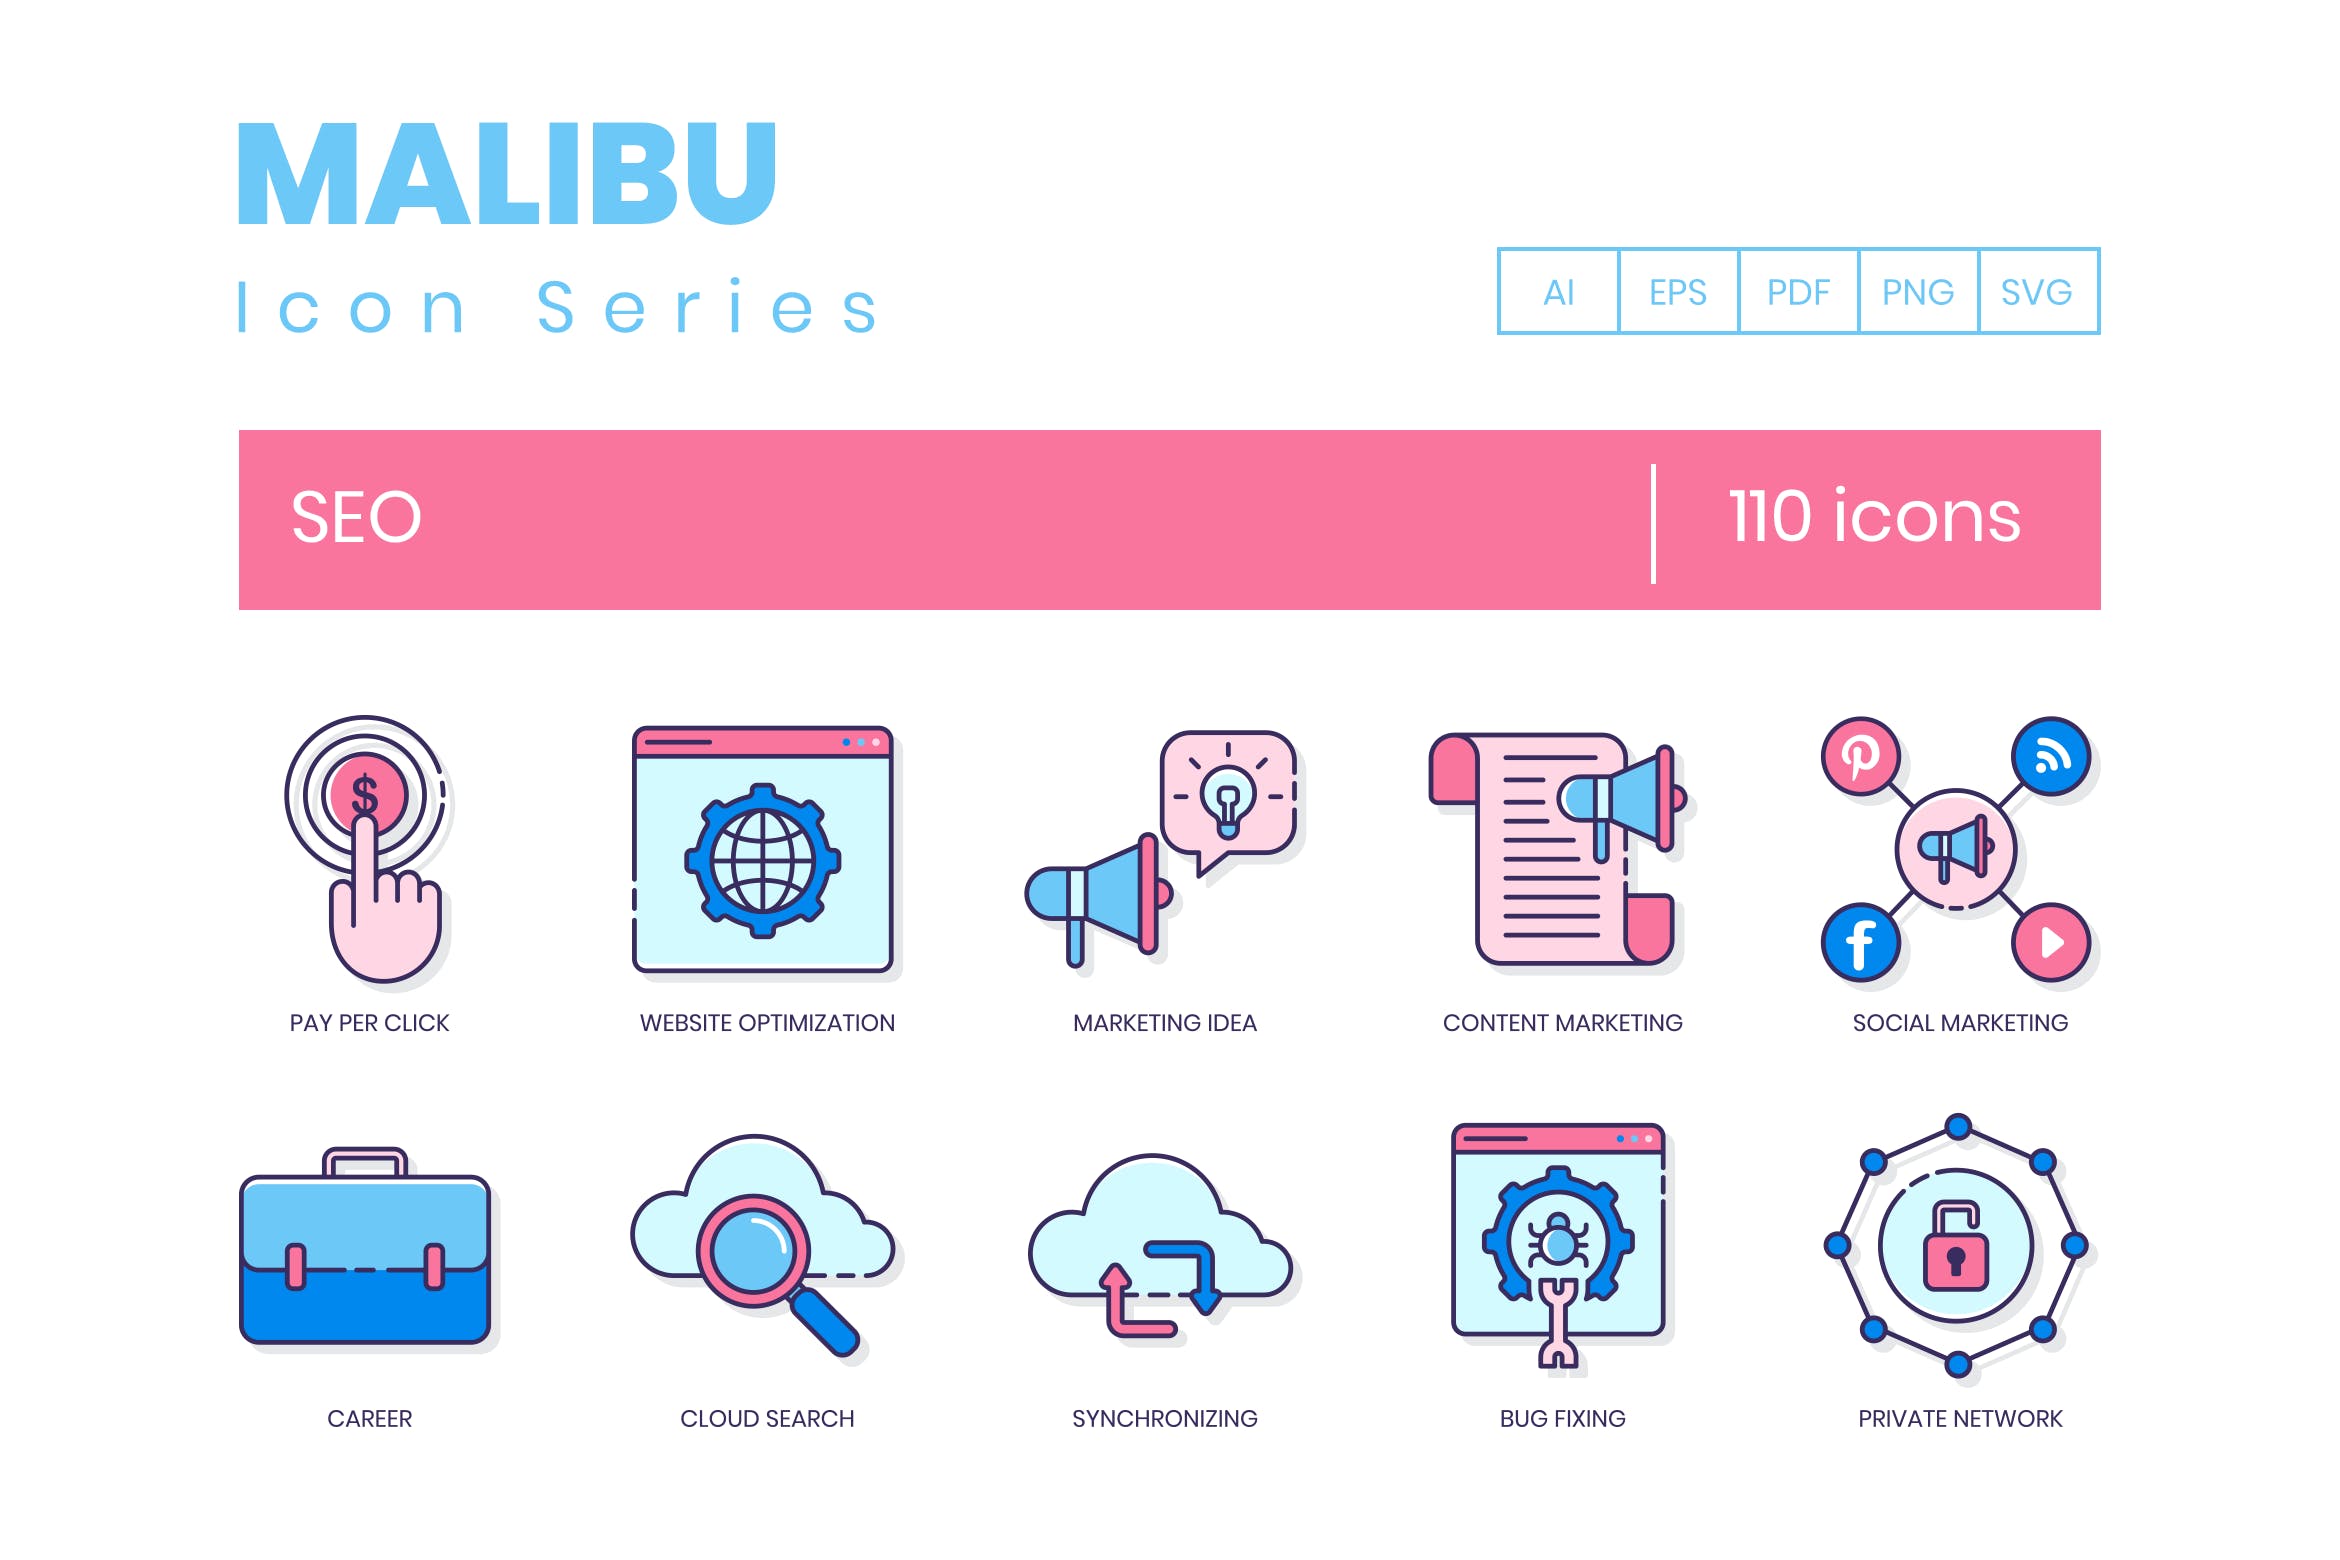 Malibu系列-110枚搜索引擎优化SEO主题图标素材 110 SEO Icons – Malibu Series插图